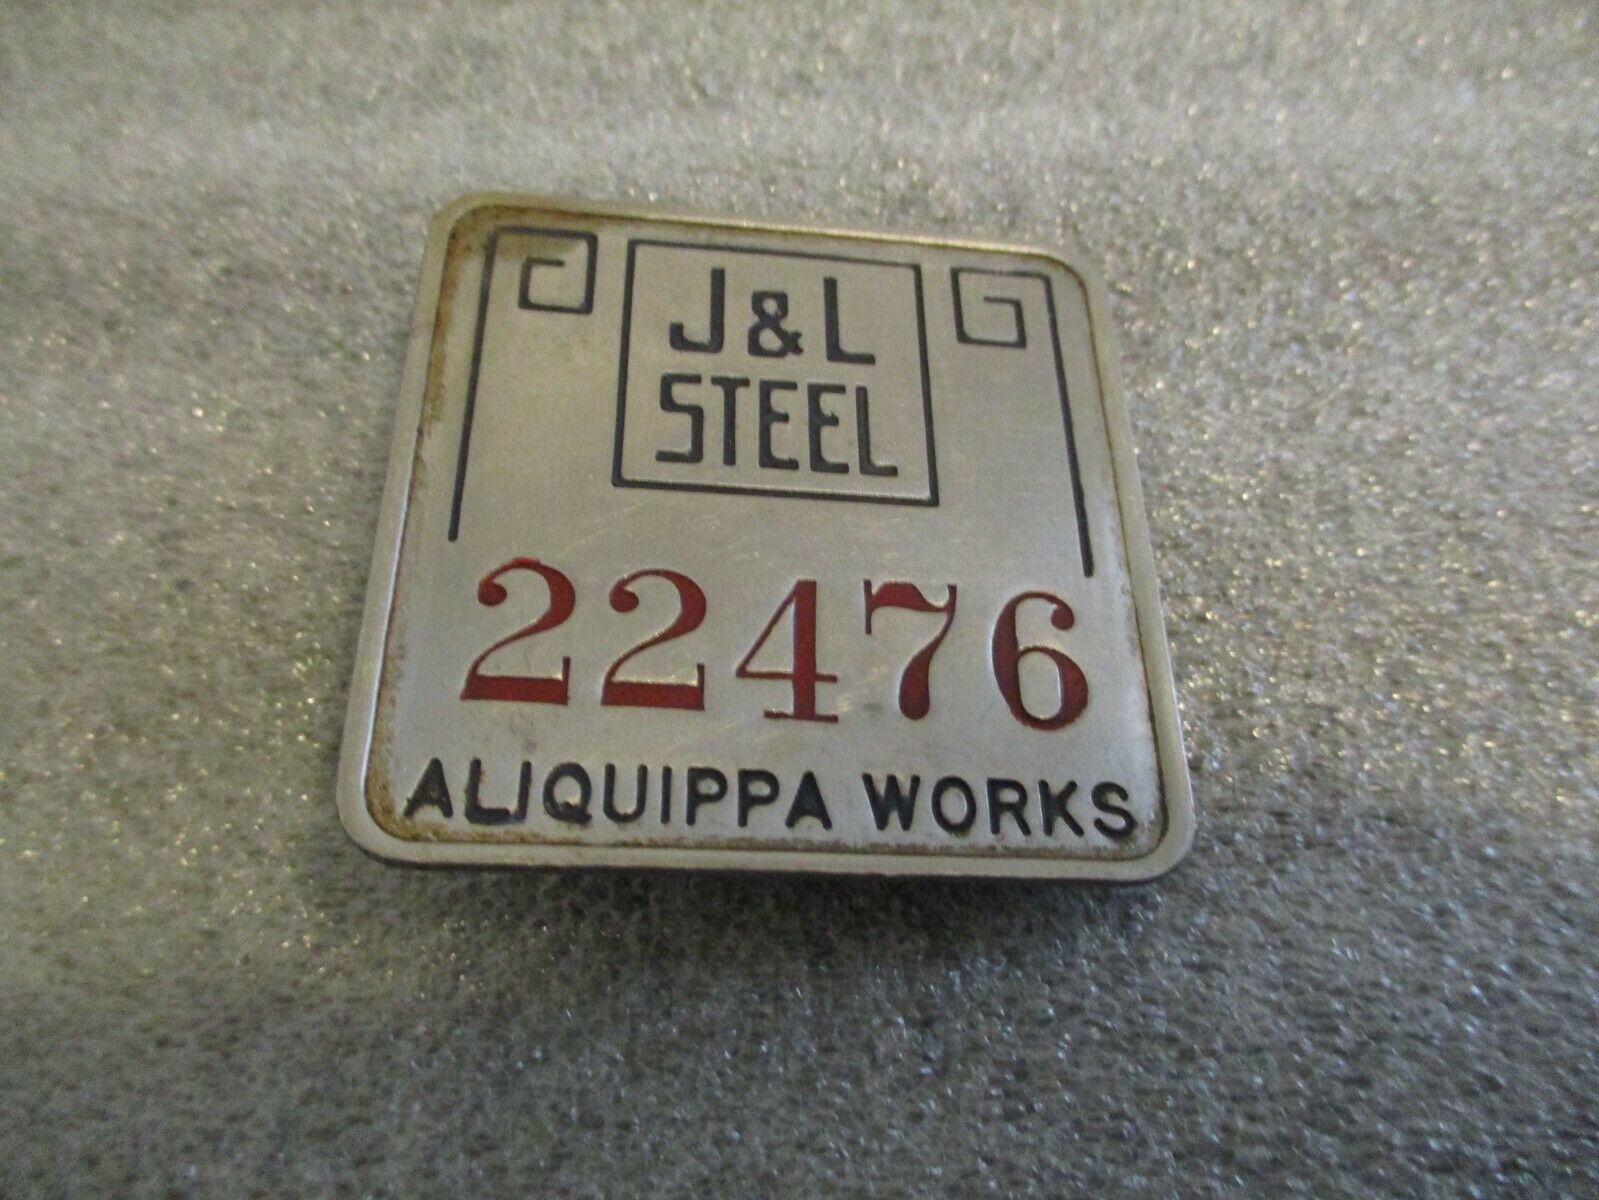 VINTAGE J&L STEEL ALIQUIPPA WORKS #22476 BADGE (OBSOLETE)- PIN BACK PENNSYLVANIA